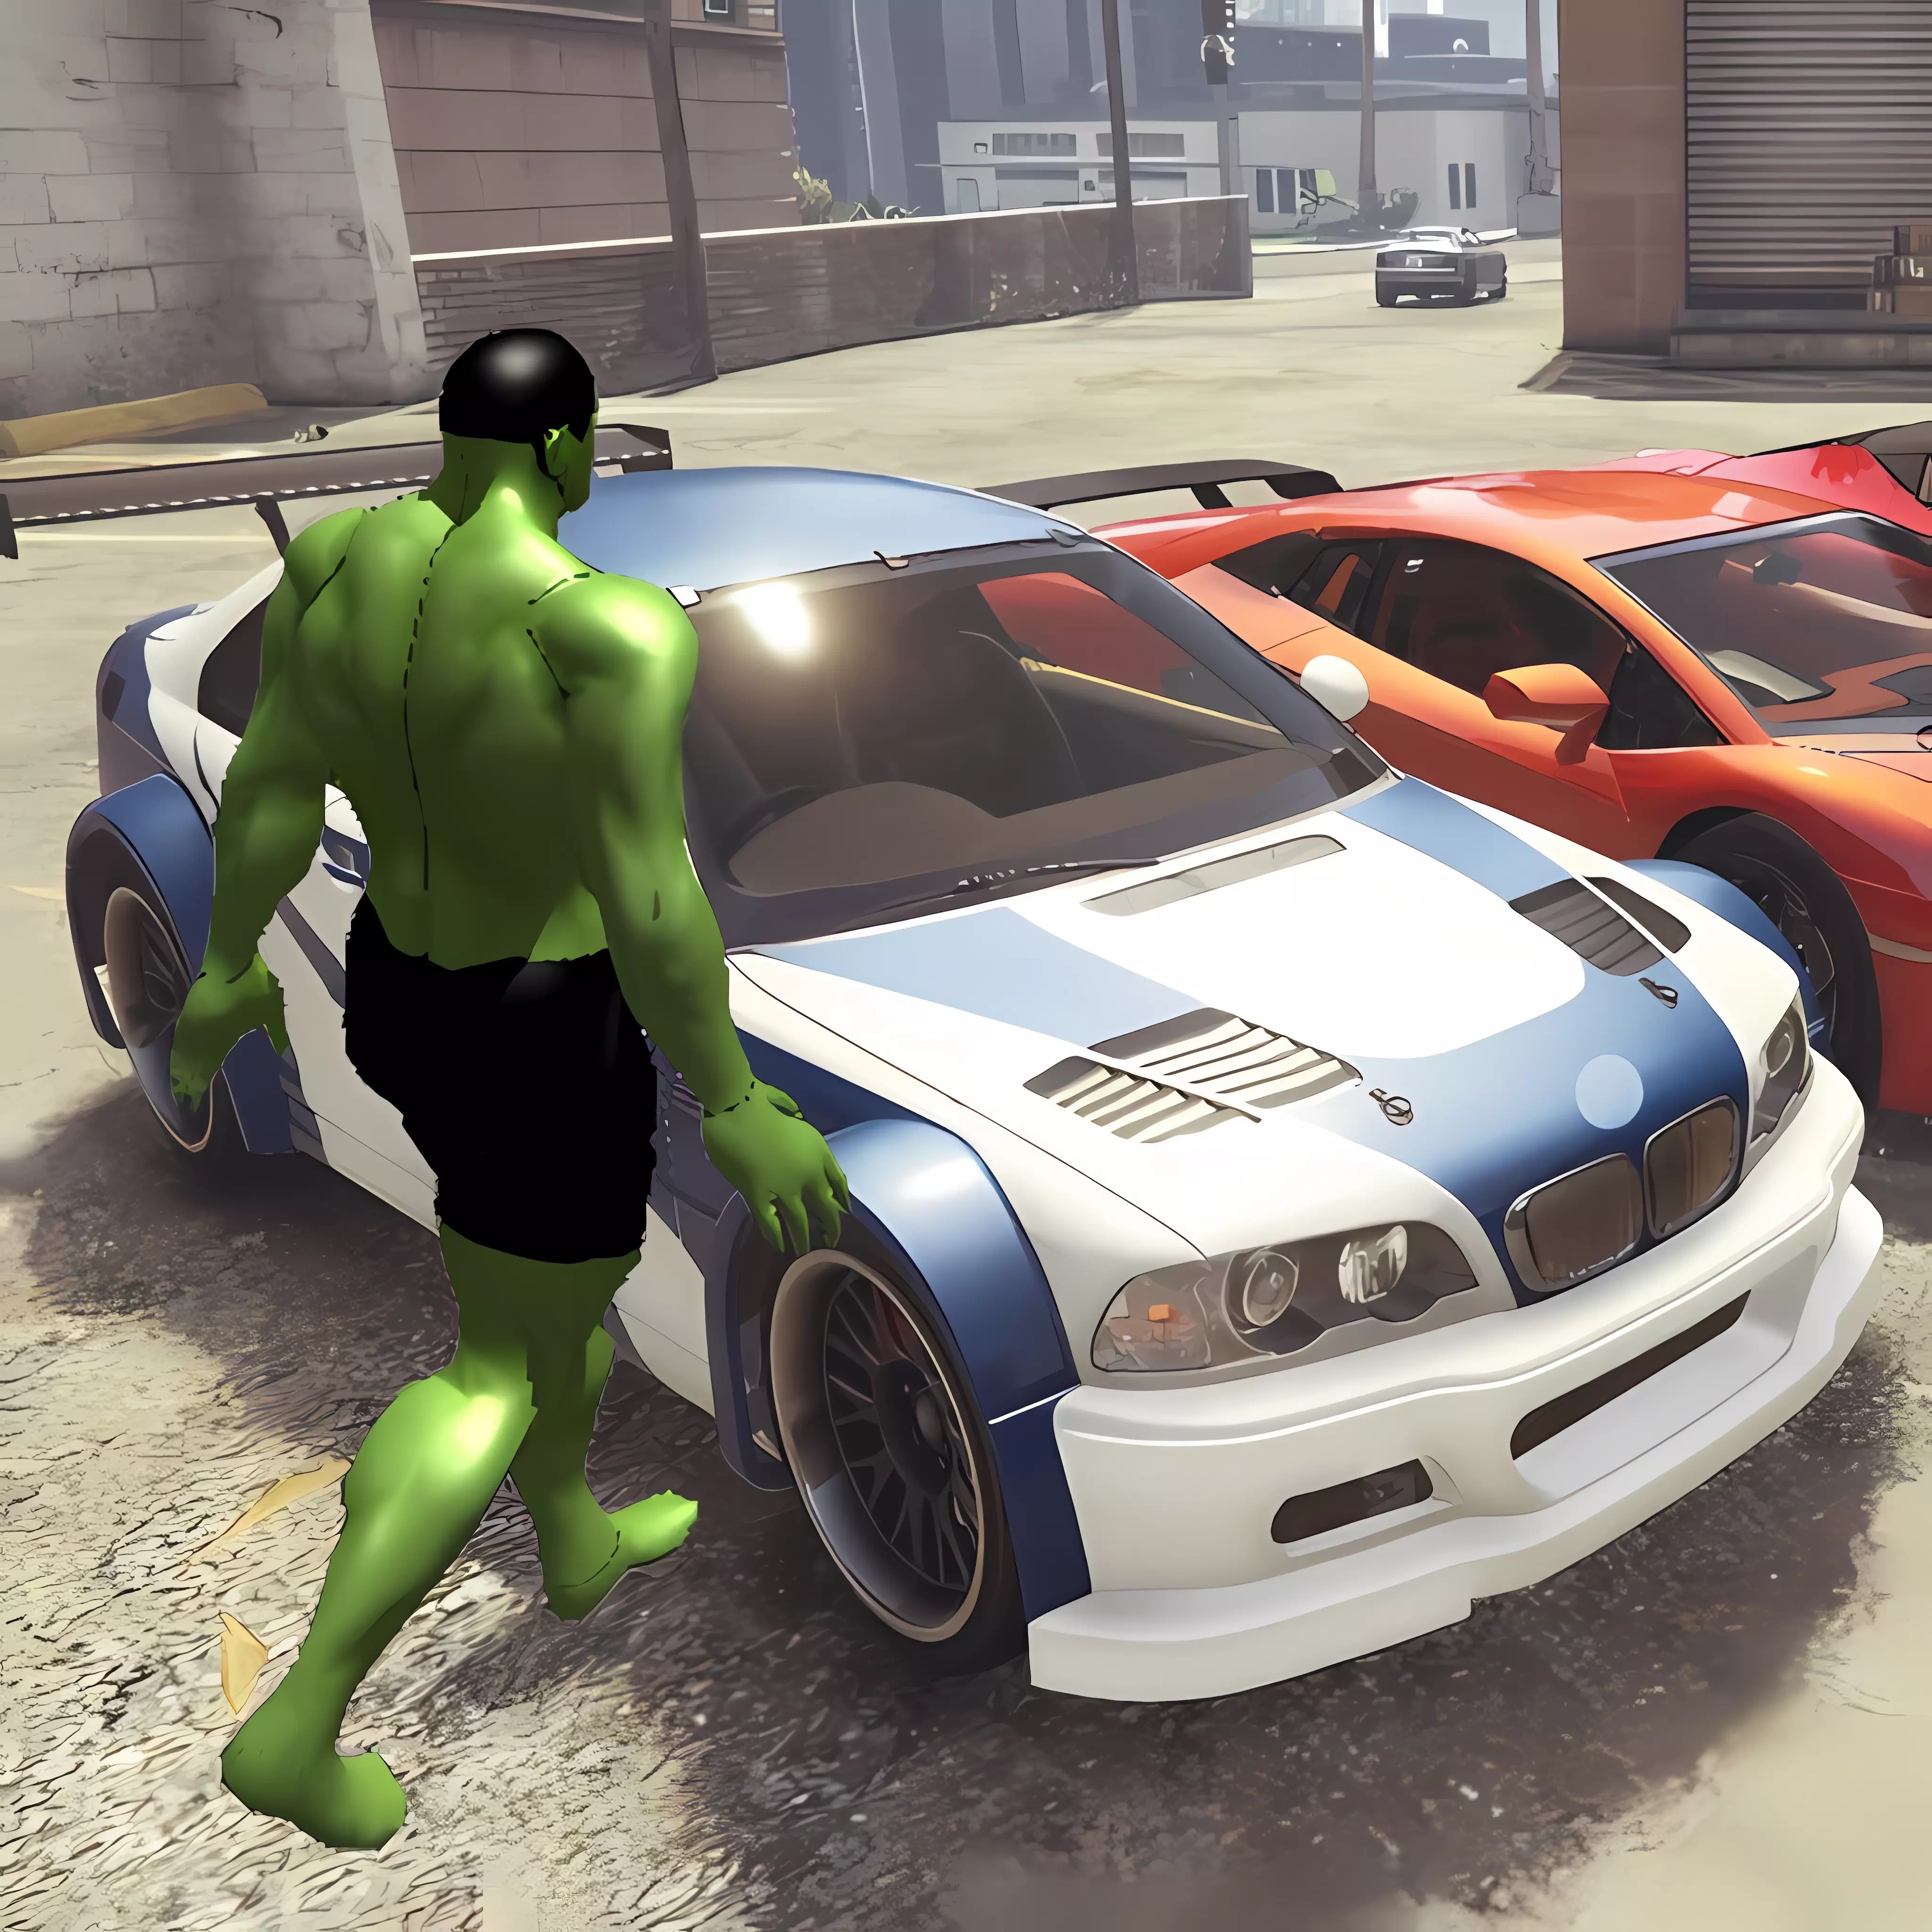 Chained Car vs Hulk